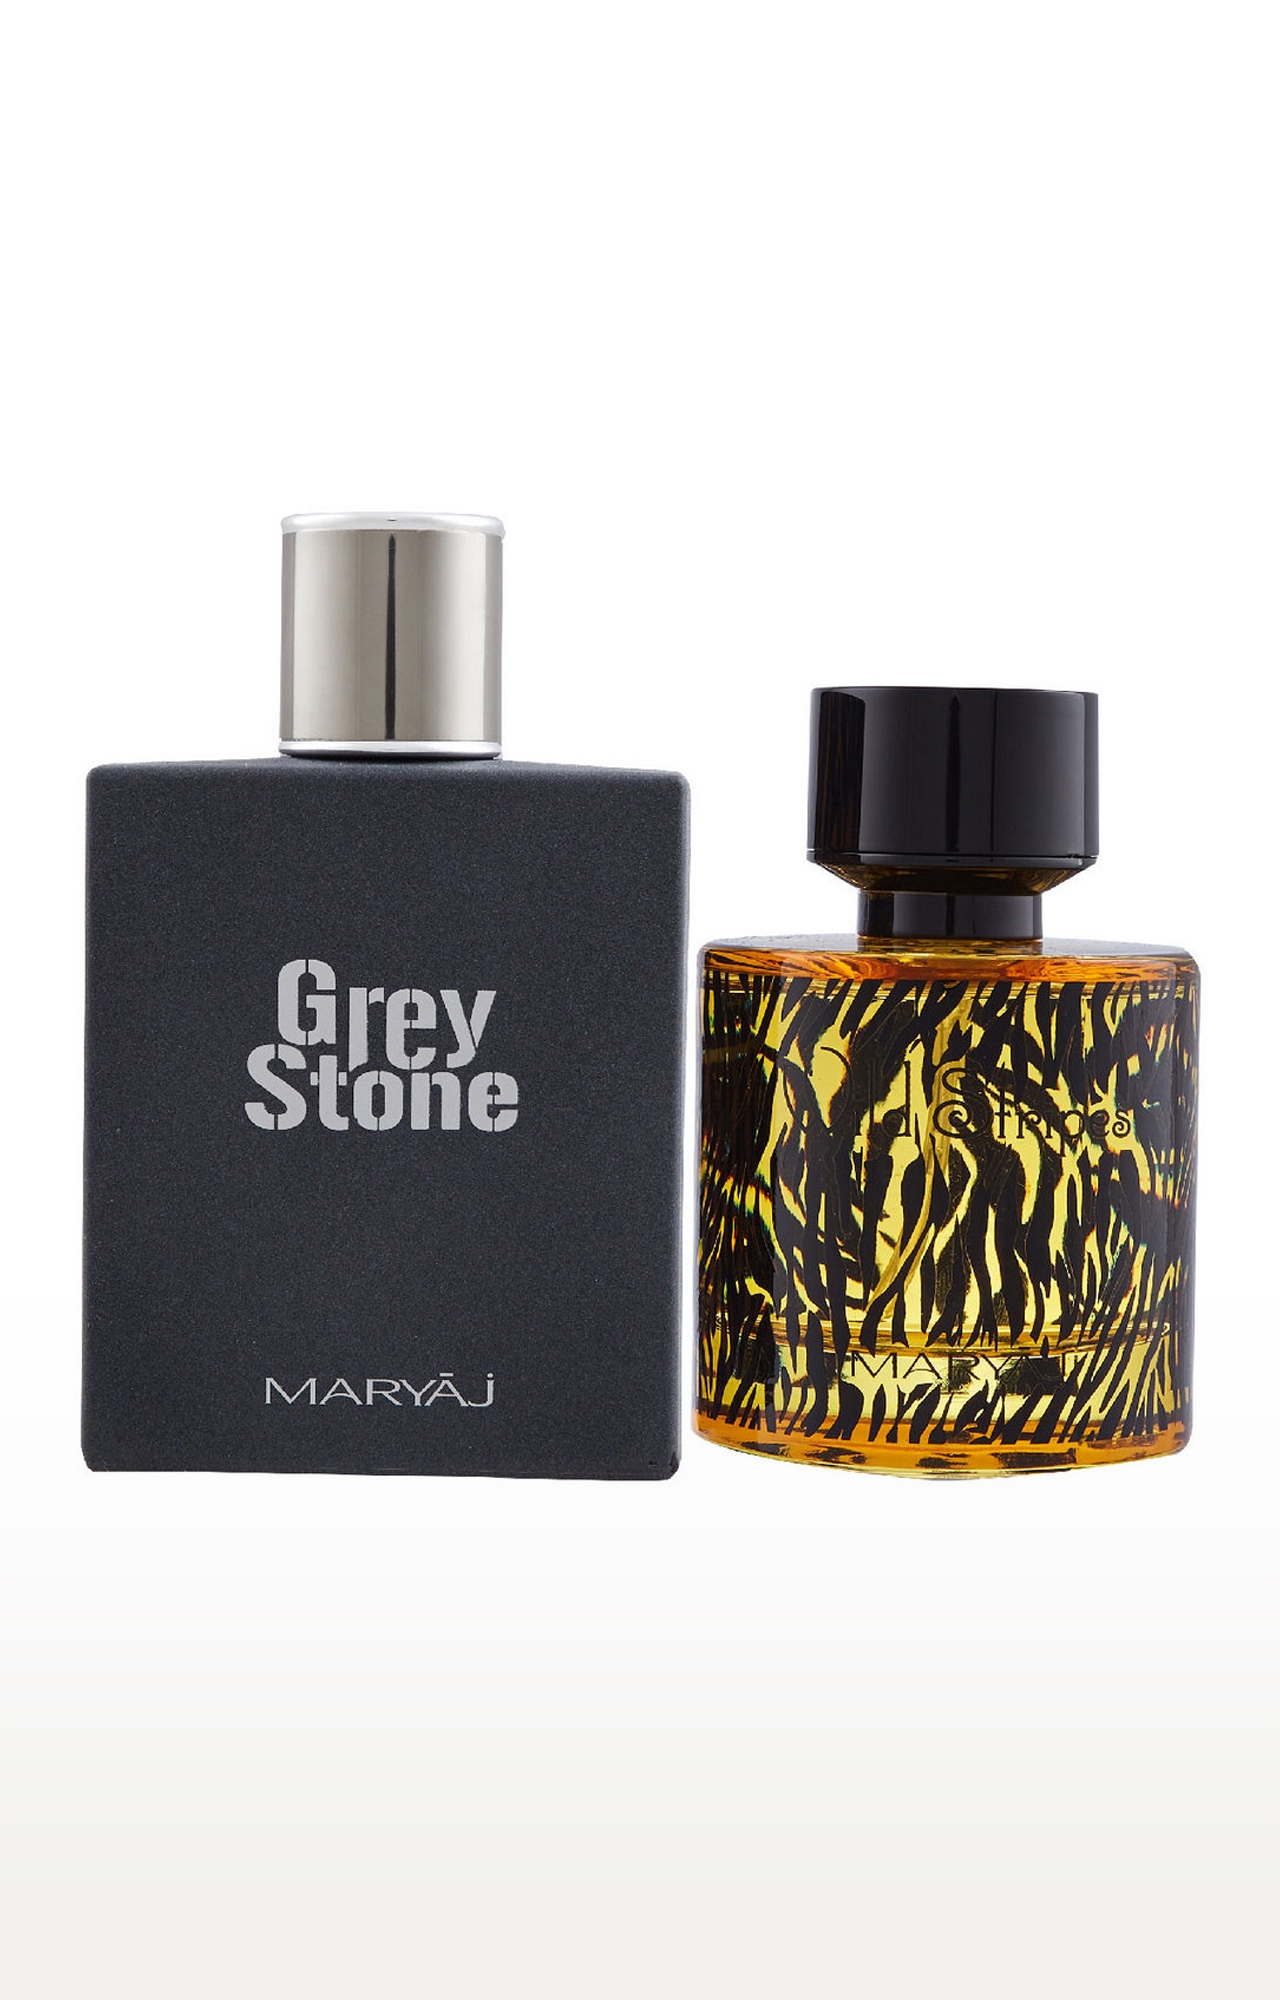 Maryaj Grey Stone Eau De Parfum Perfume 100ml for Men and Maryaj Wild Stripes Eau De Parfum Oriental Perfume 100ml for Men